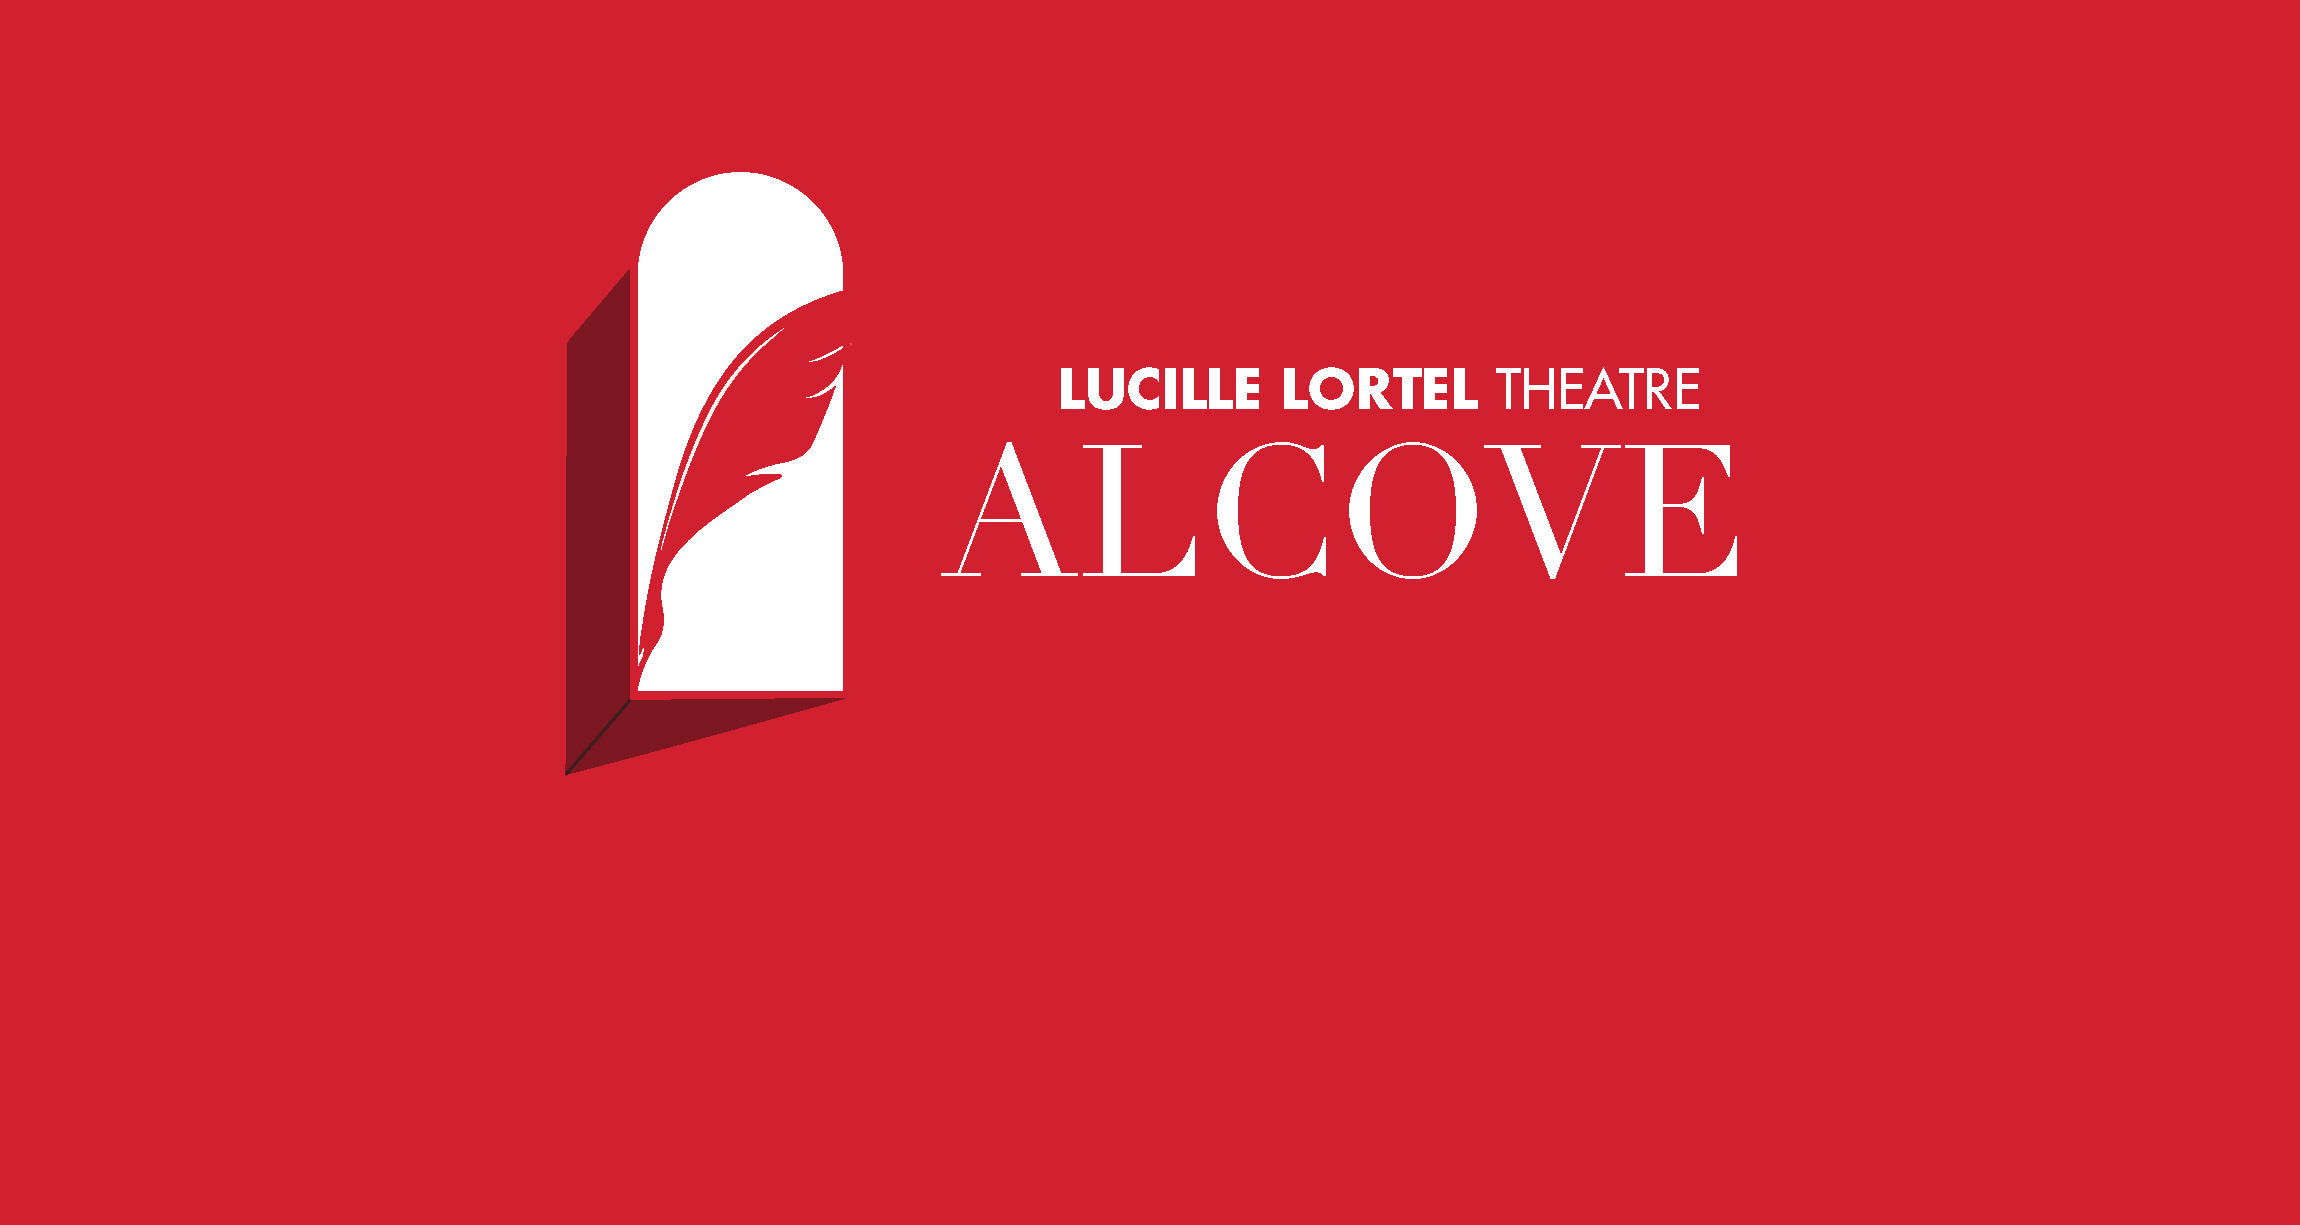 Lucille Lortel Theatre: Alcove logo